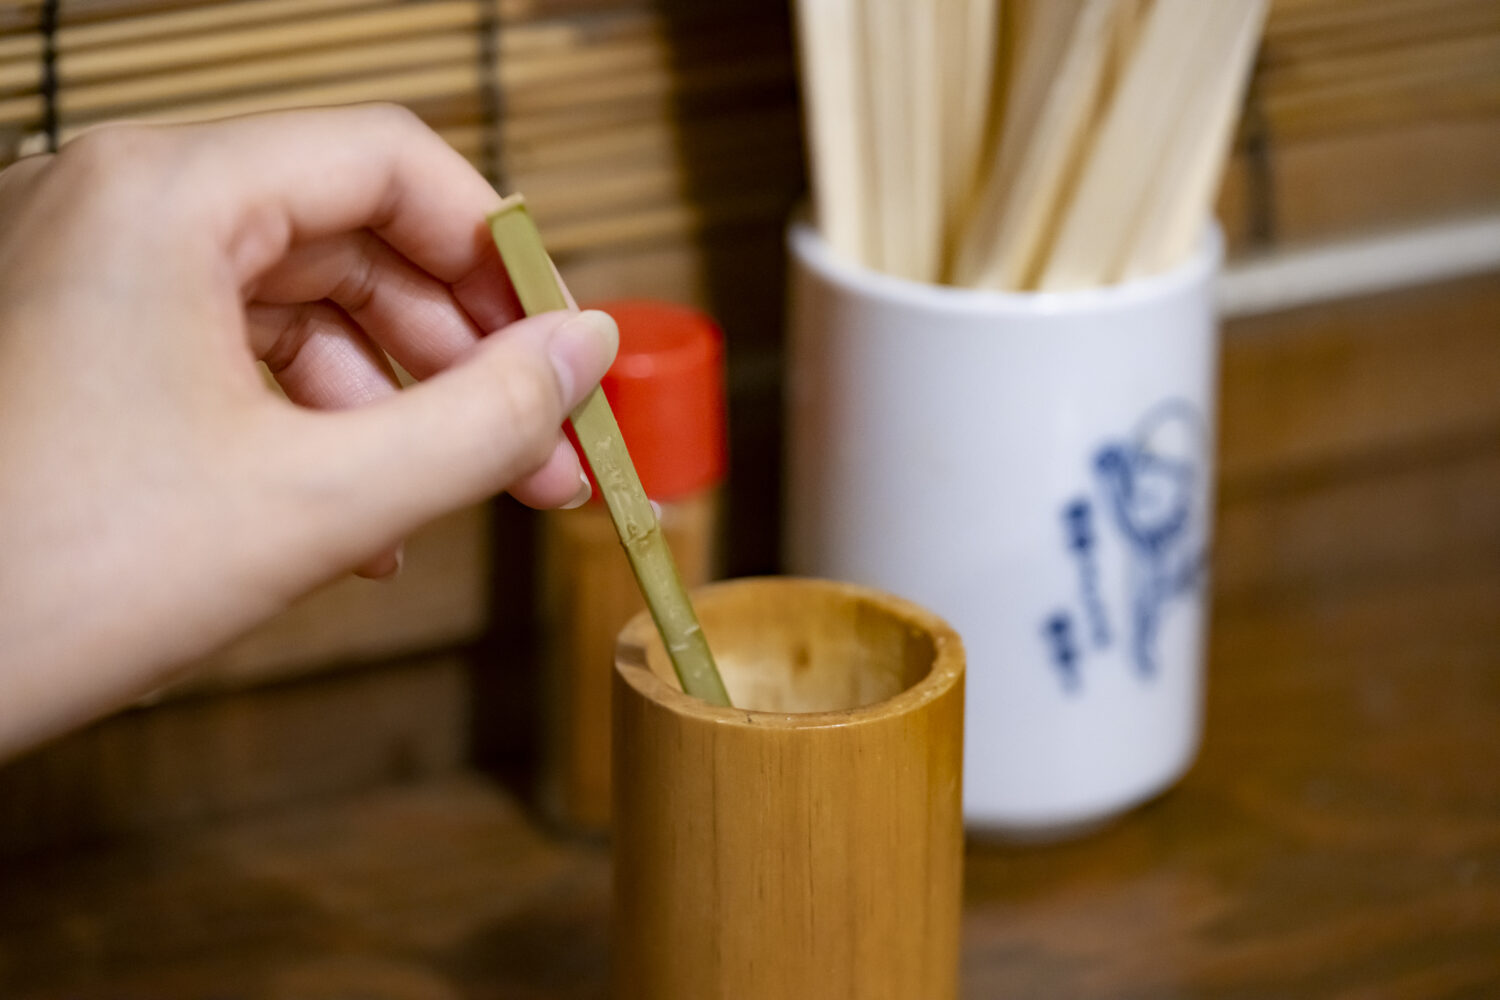 How to eat yakitori